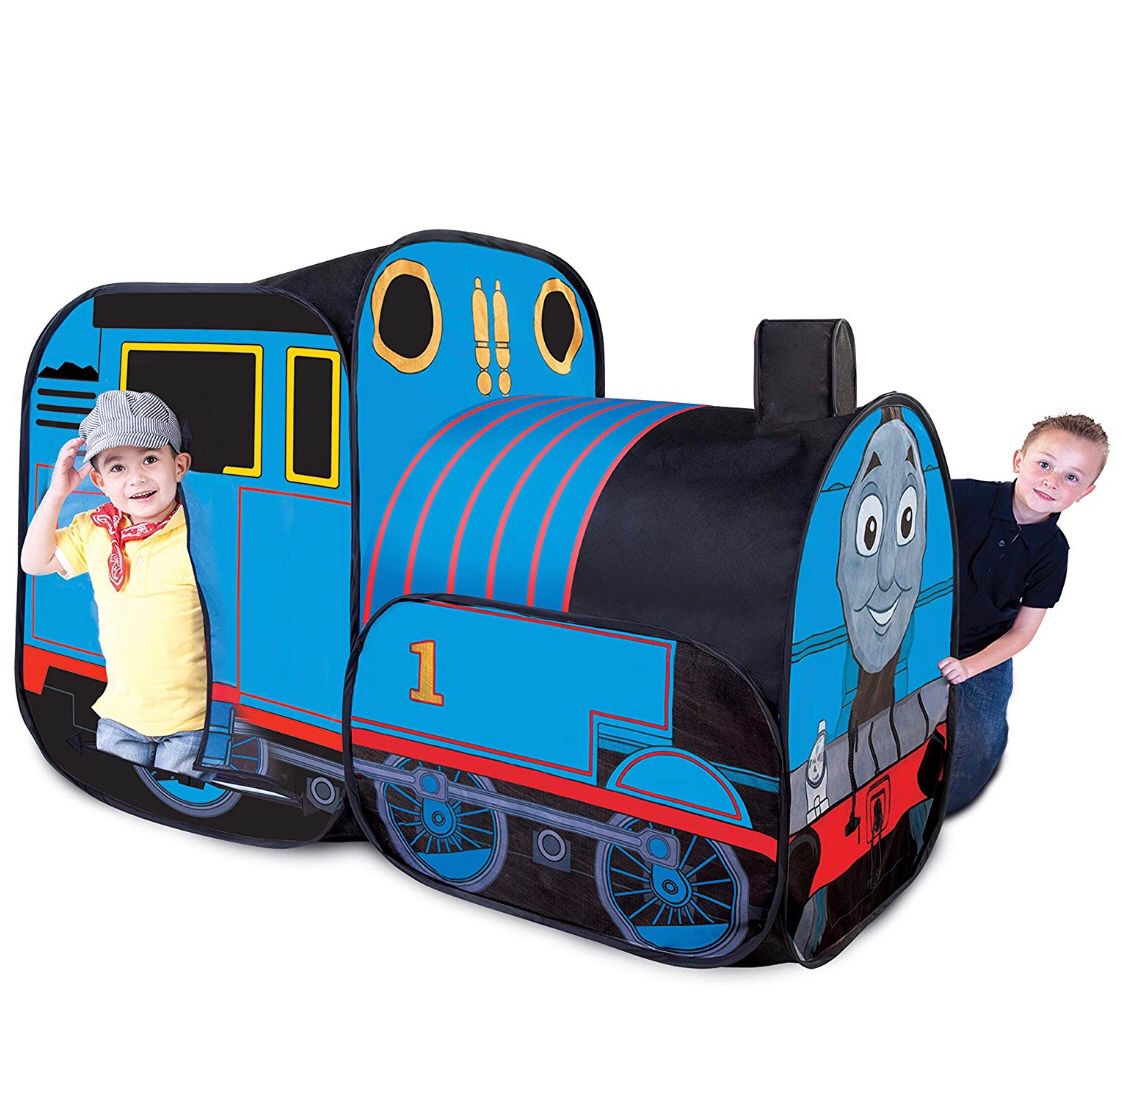 Thomas the Train Play Vehicle!